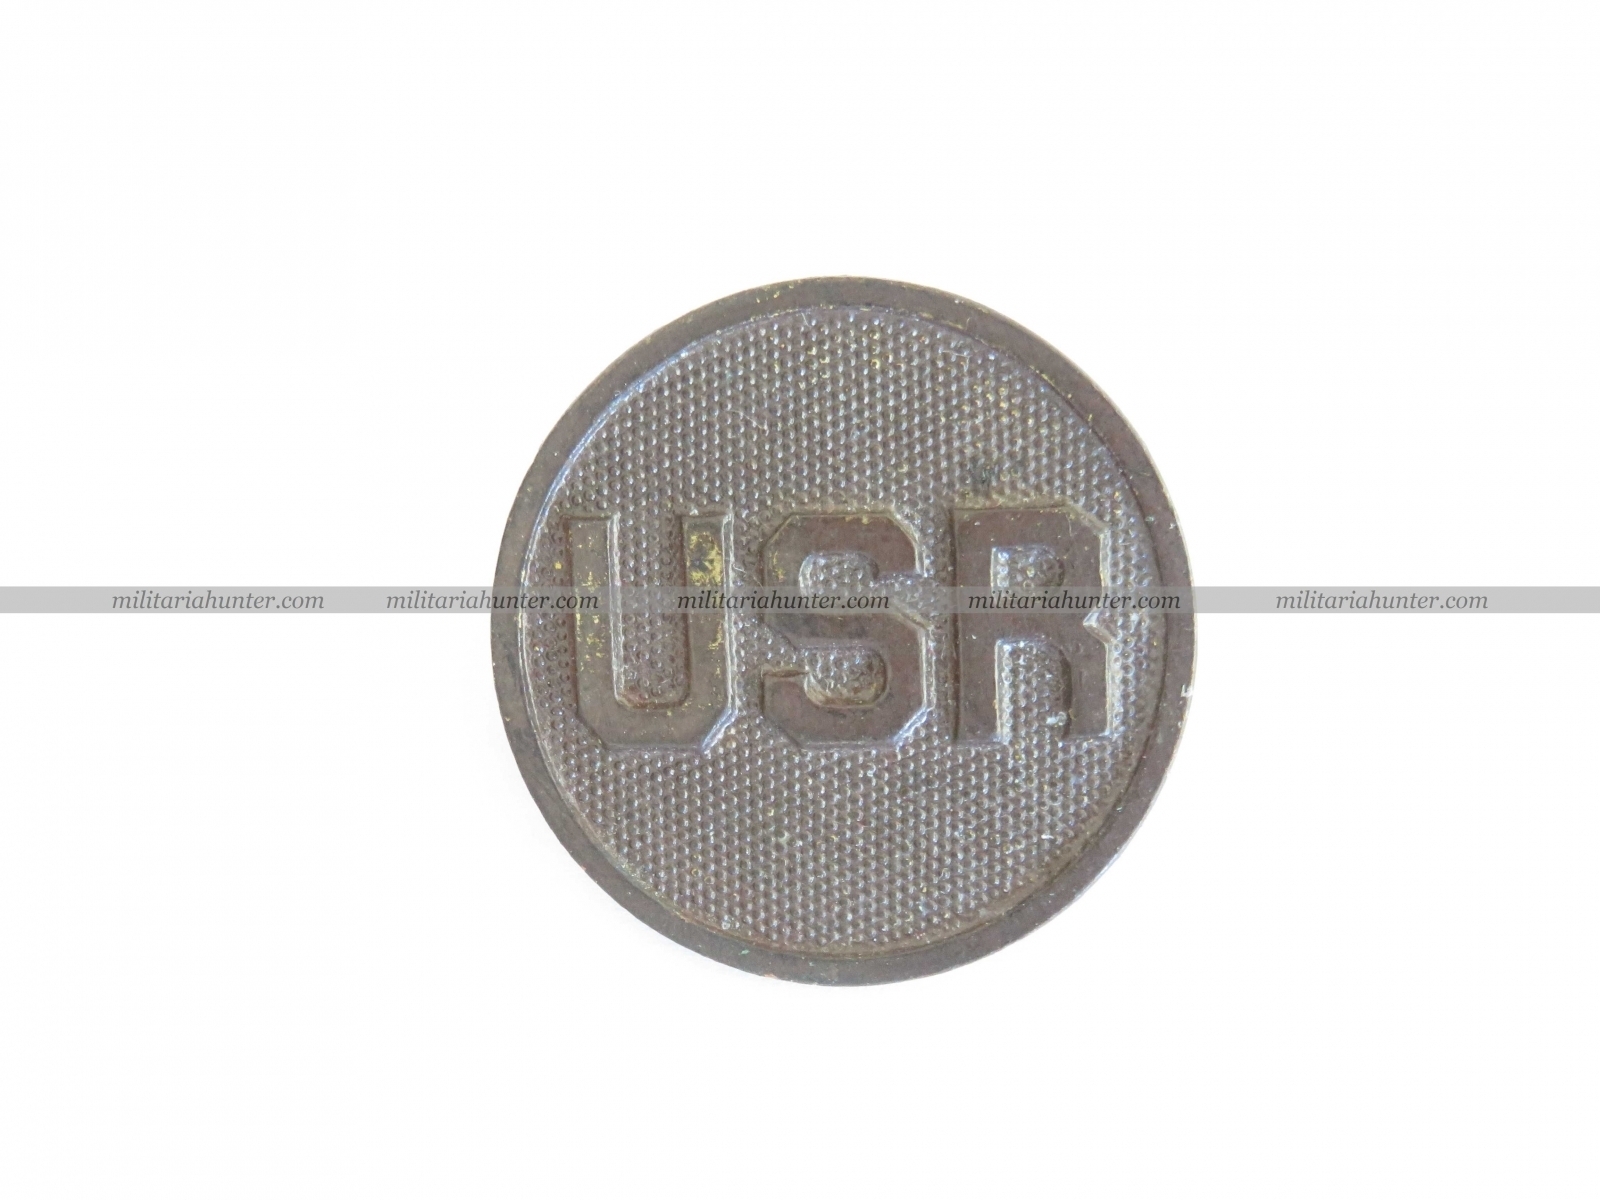 militaria : Collar Disk USR Reserve ww1